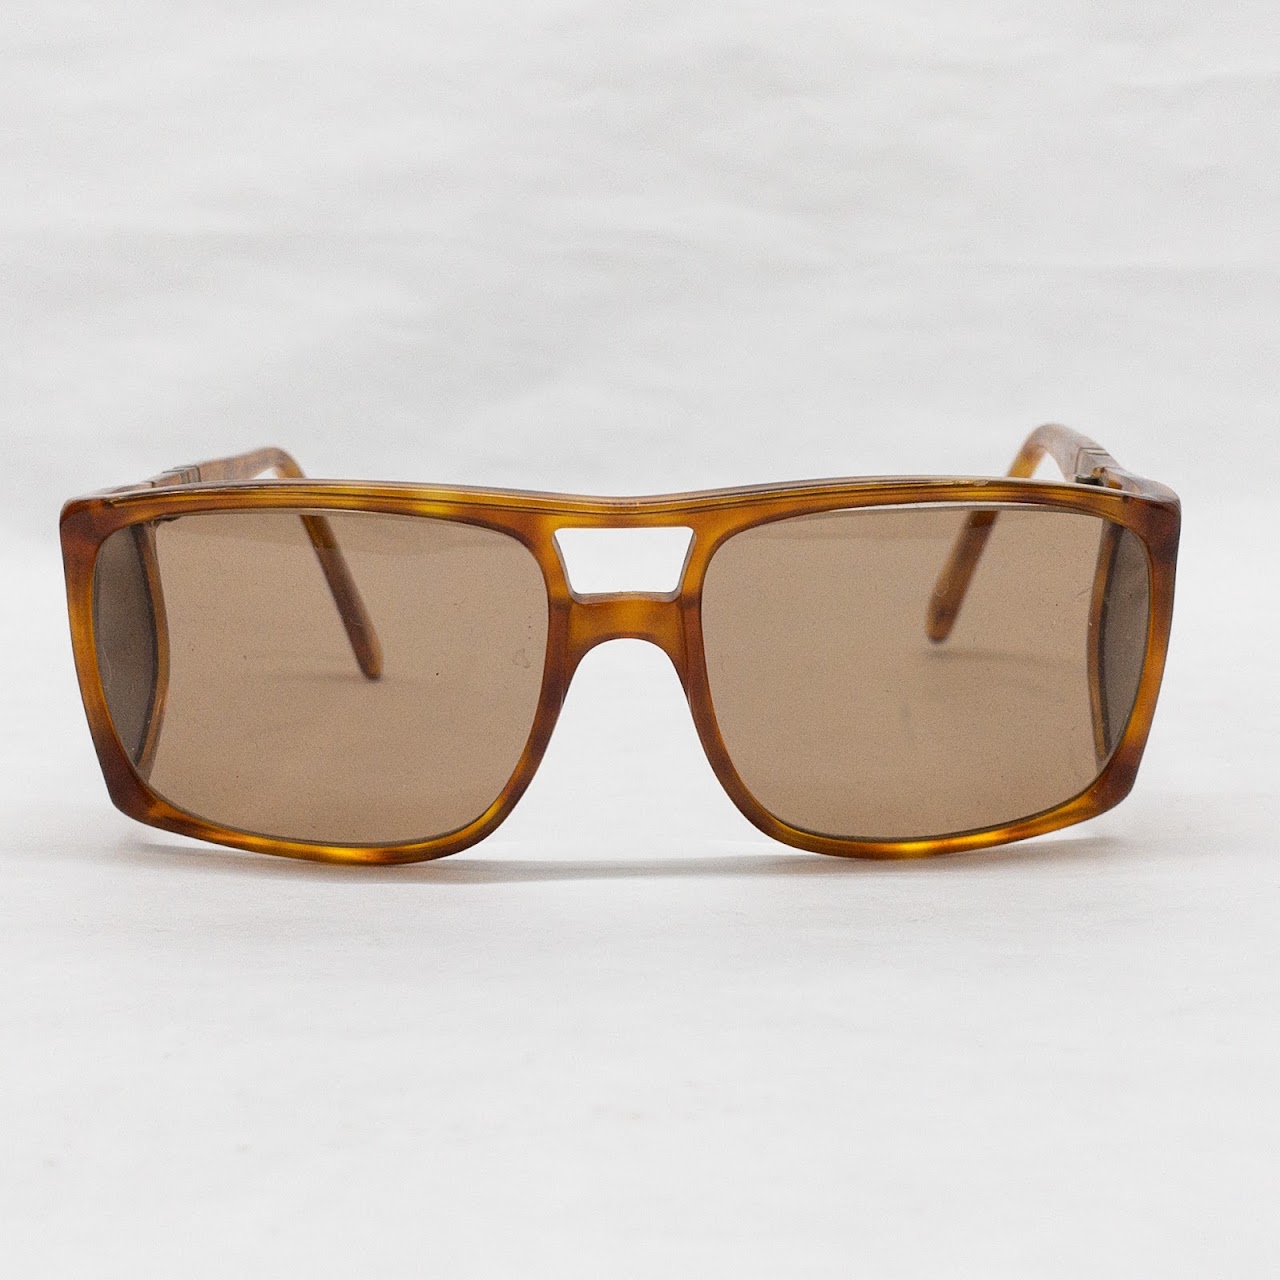 Persol Vintage RX Wraparound Sunglasses